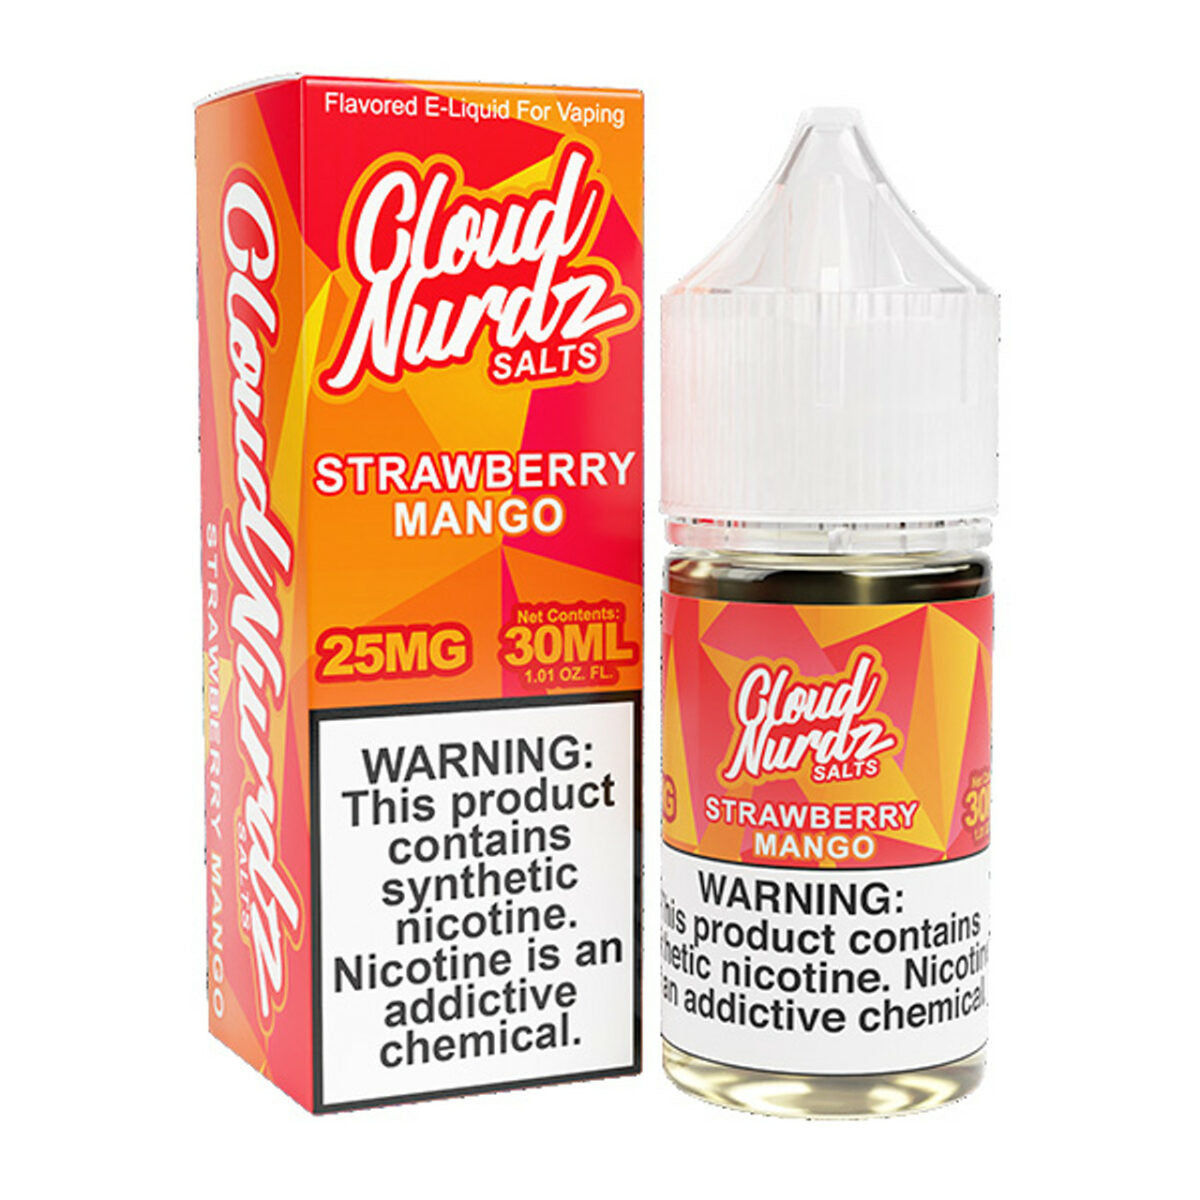 Cloud Nurdz Salt Series E-Liquid 30mL Strawberry mango with packaging